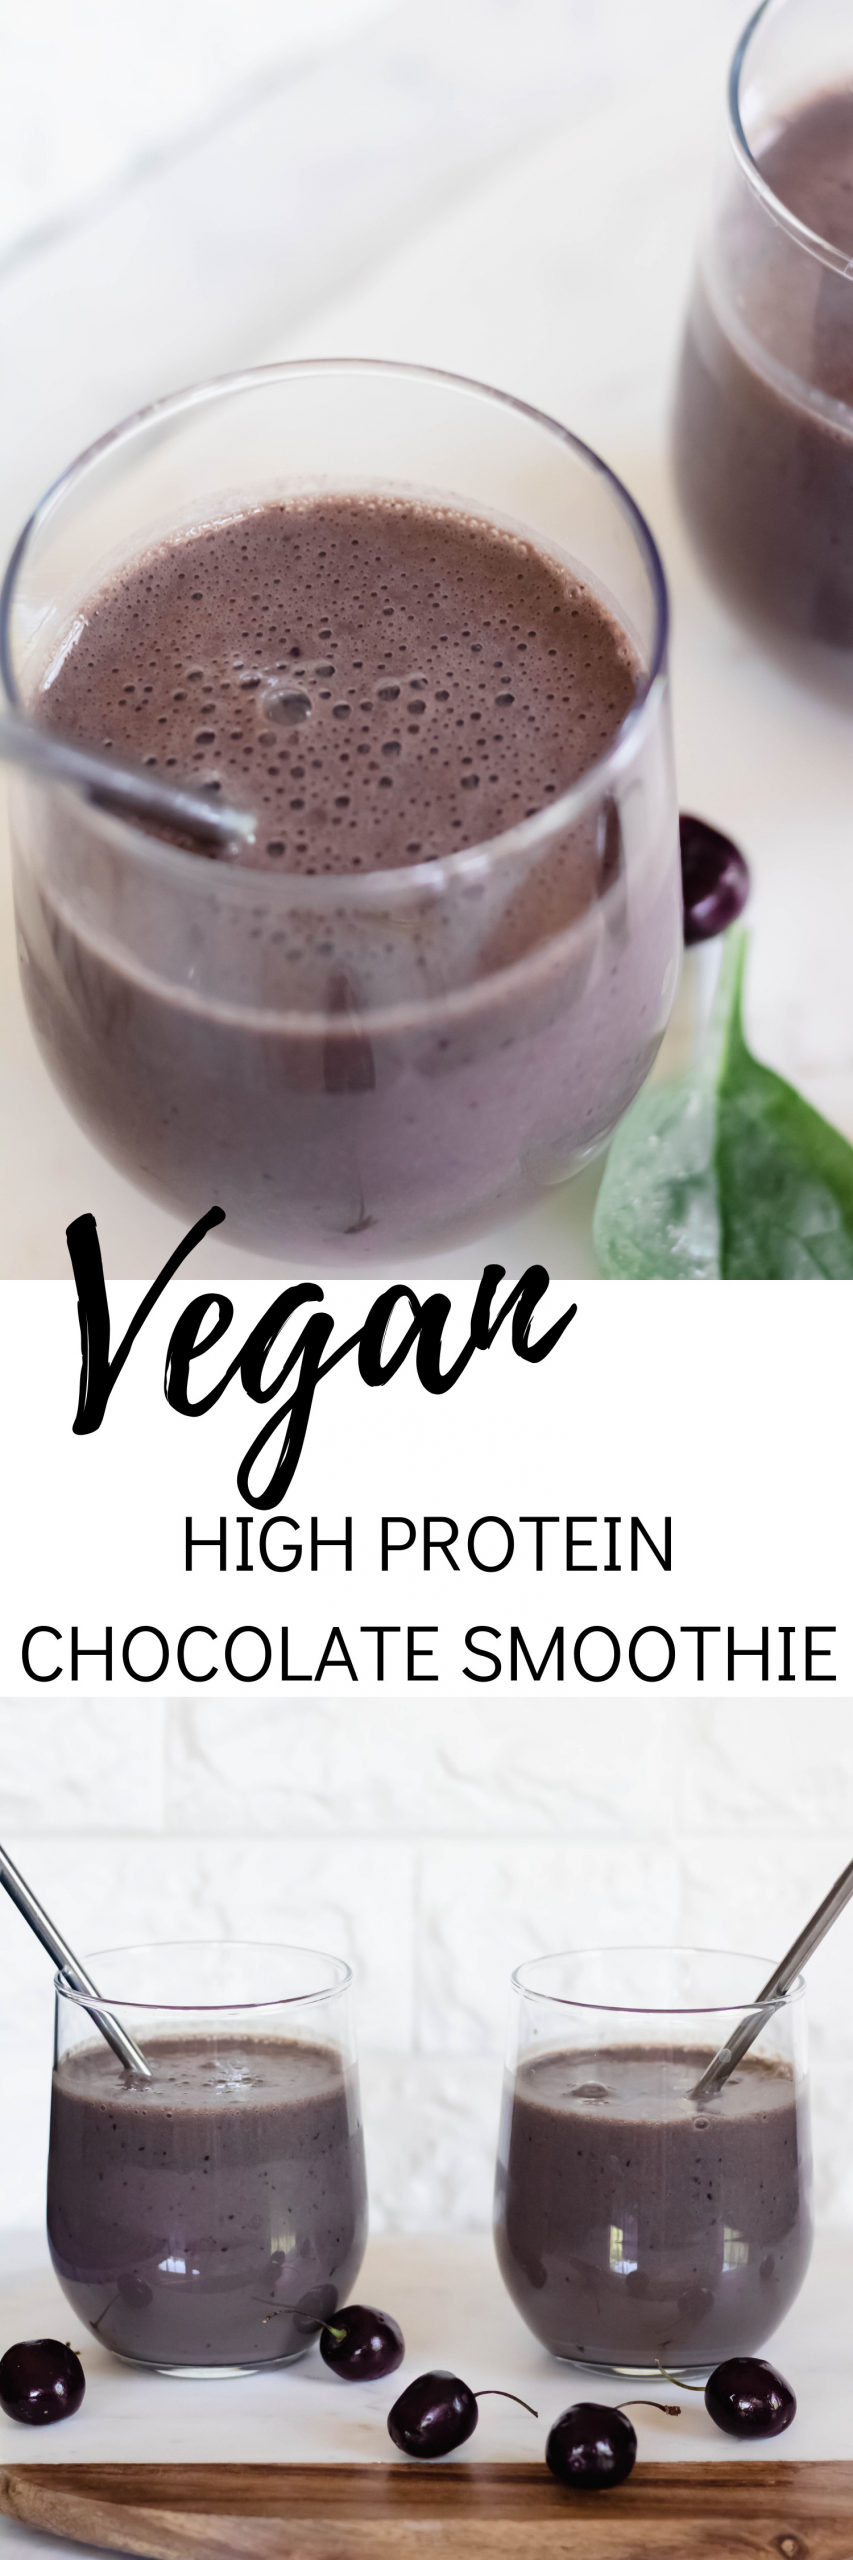 Vegan Protein Smoothie Recipes
 High protein chocolate smoothie Recipe